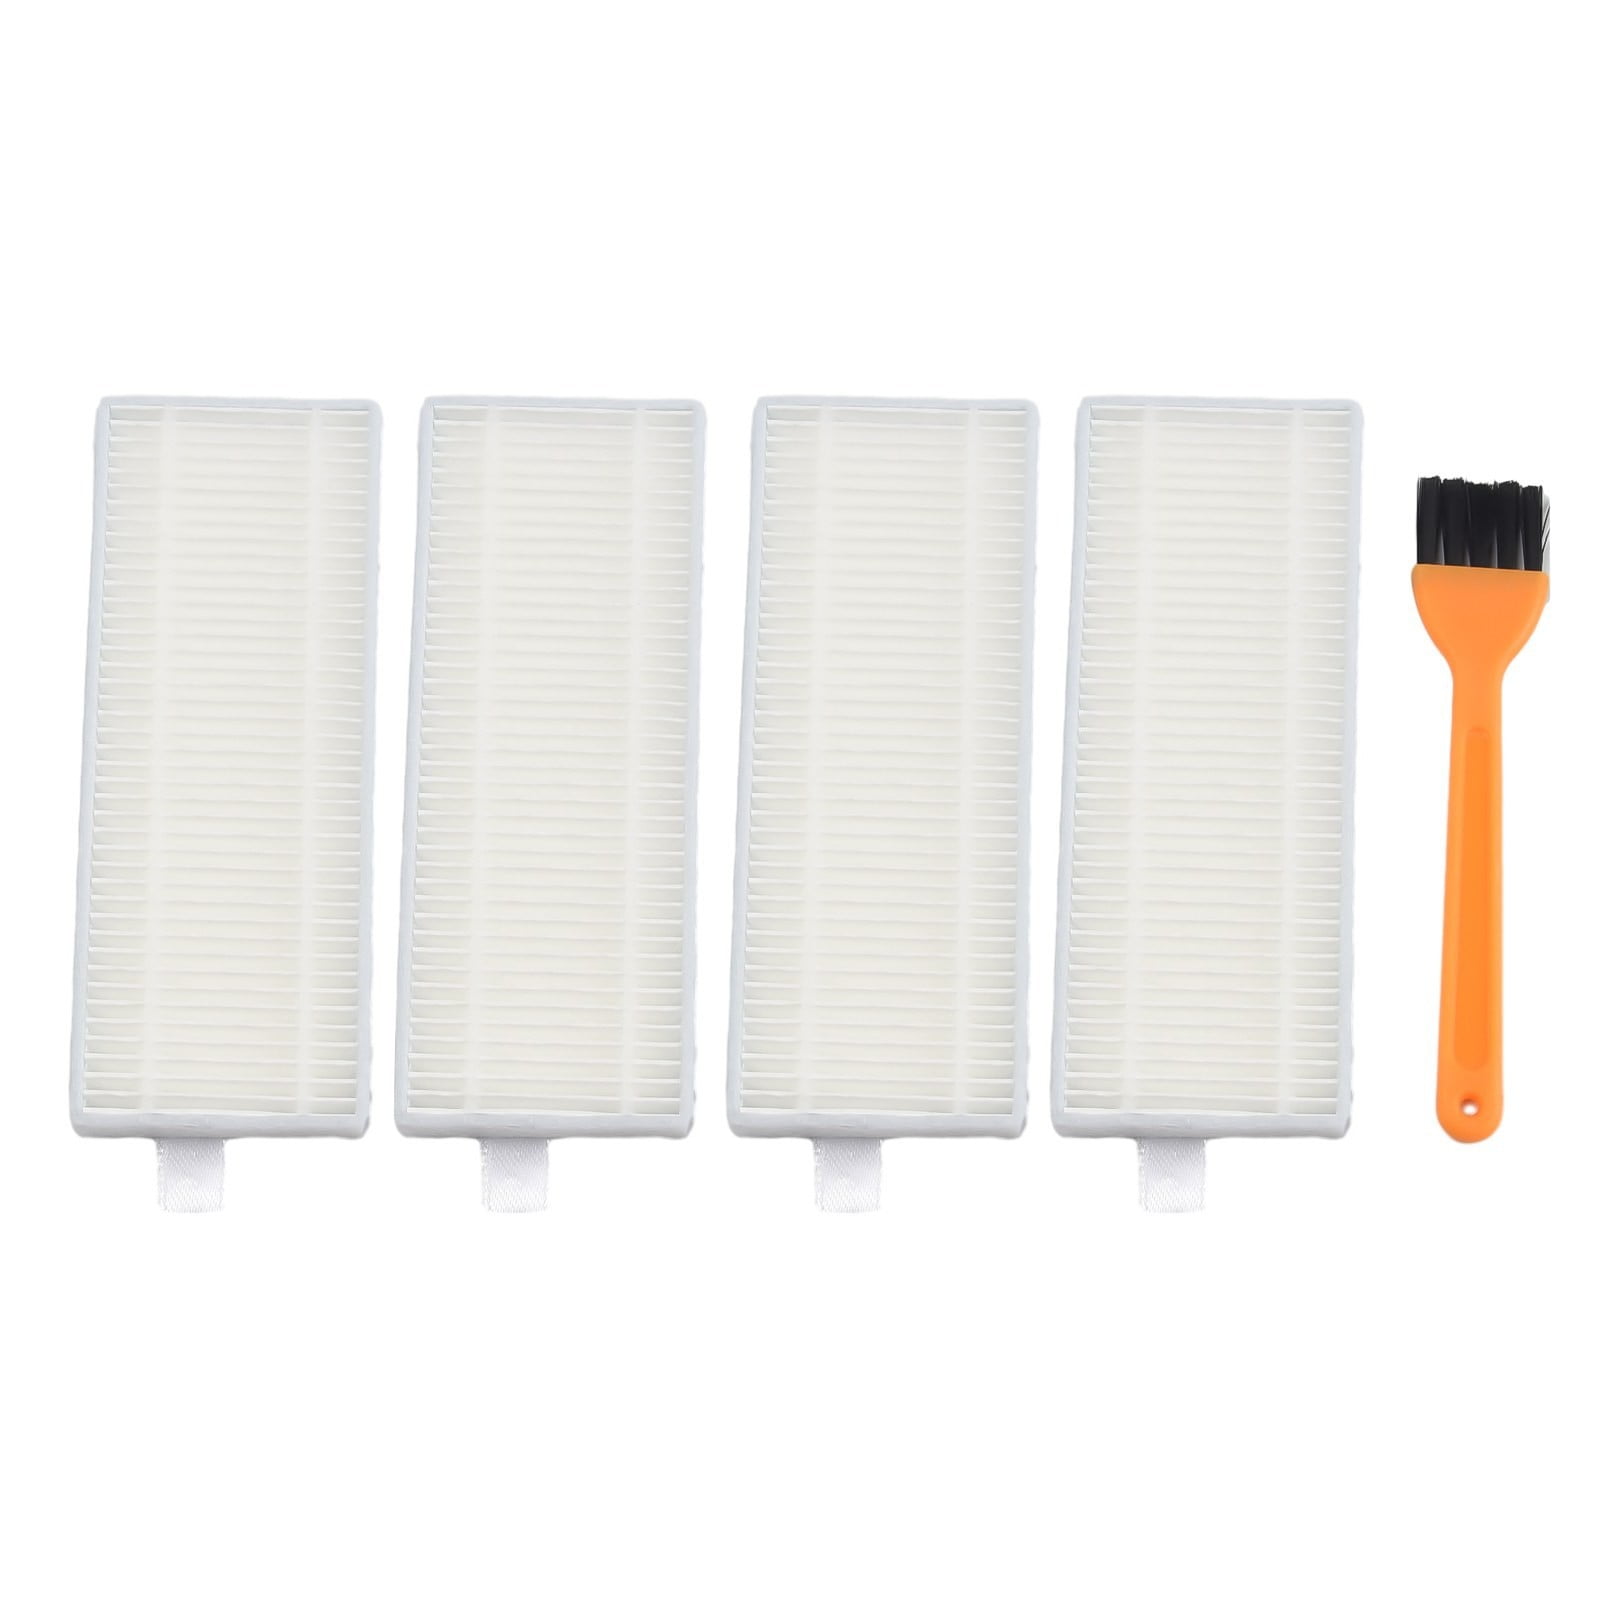 4 Side Brushes + 4 HEPA Filters for Lefant M1 U180 M201 T700 M571